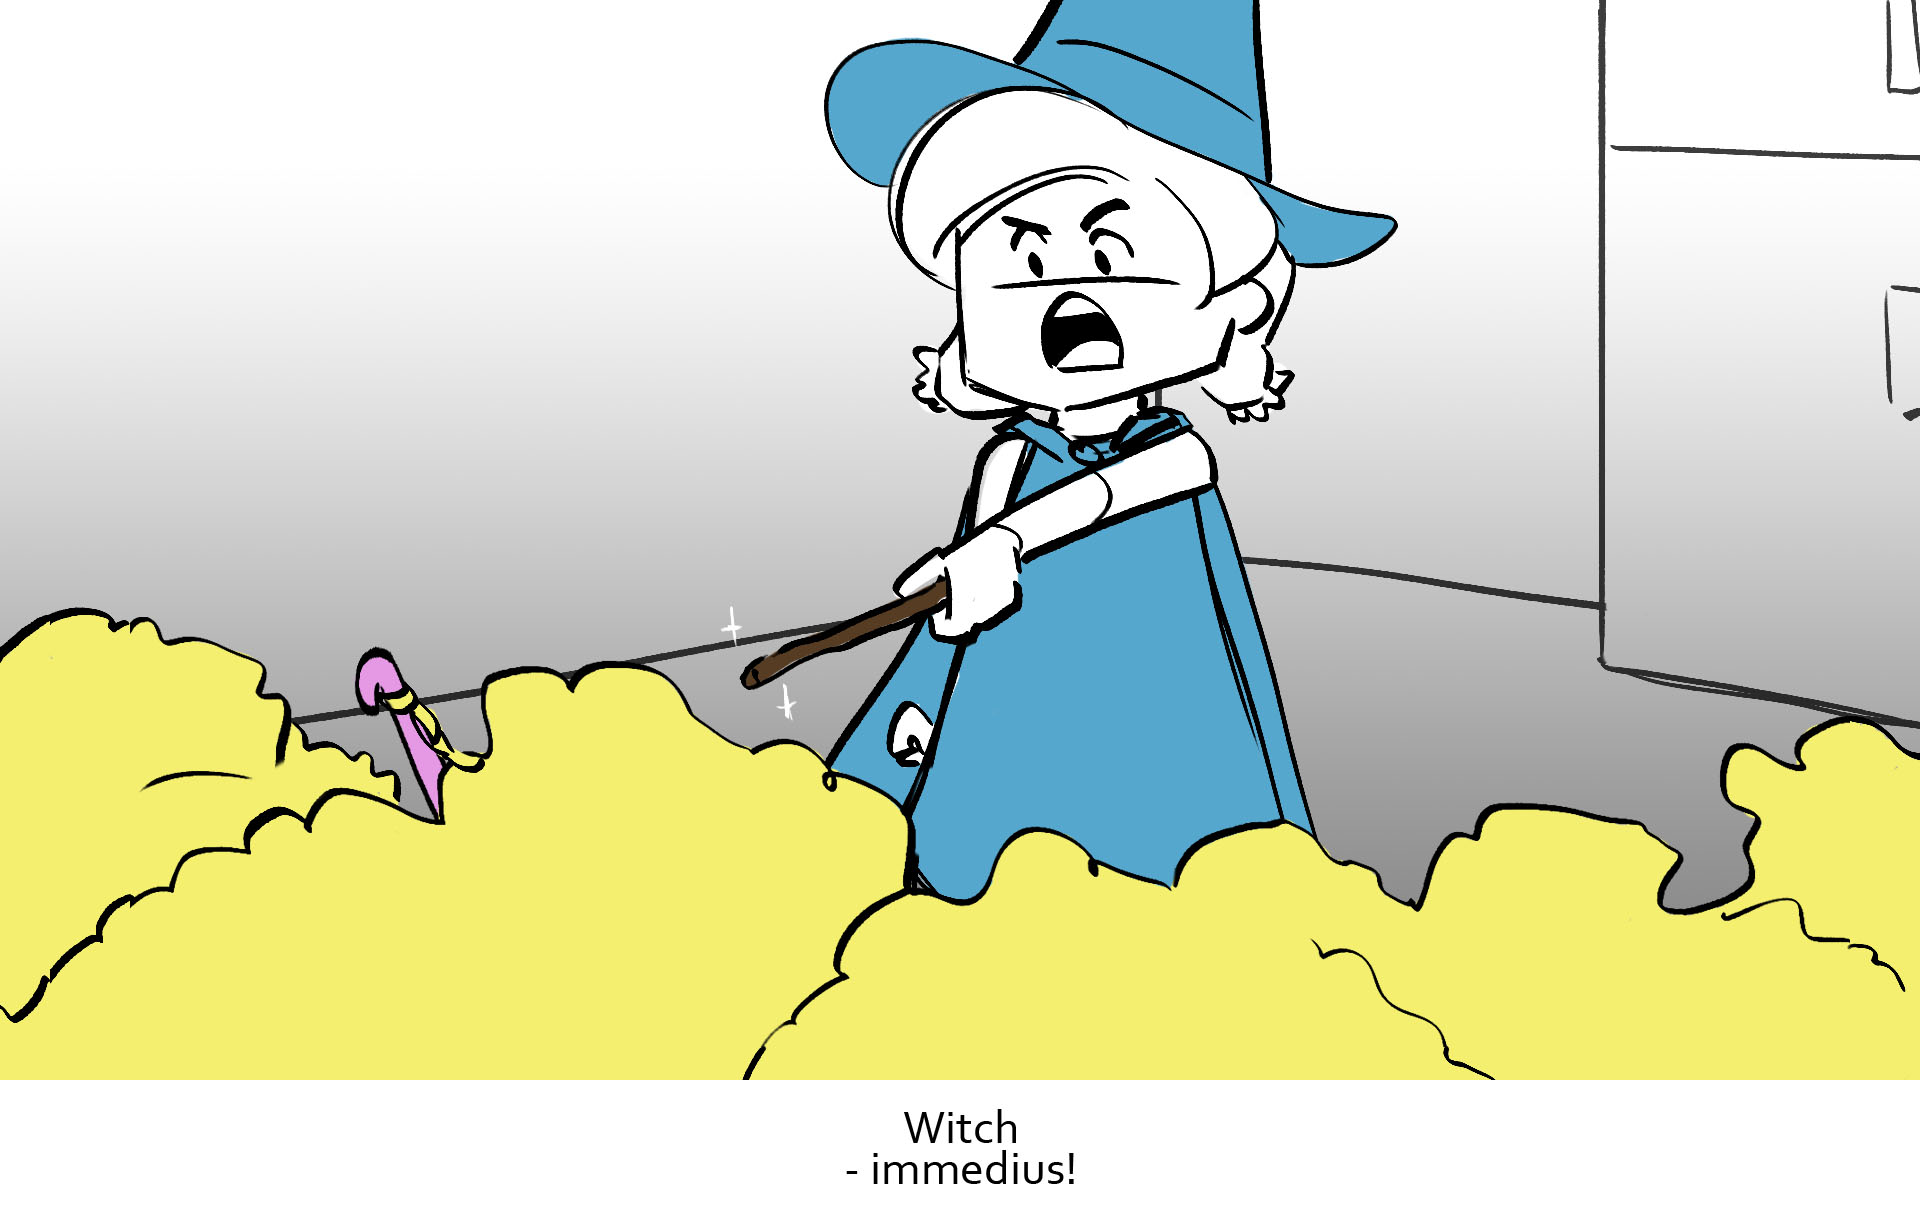 CrochetWitch_wDialogue_0056_Witch - immedius!.jpg